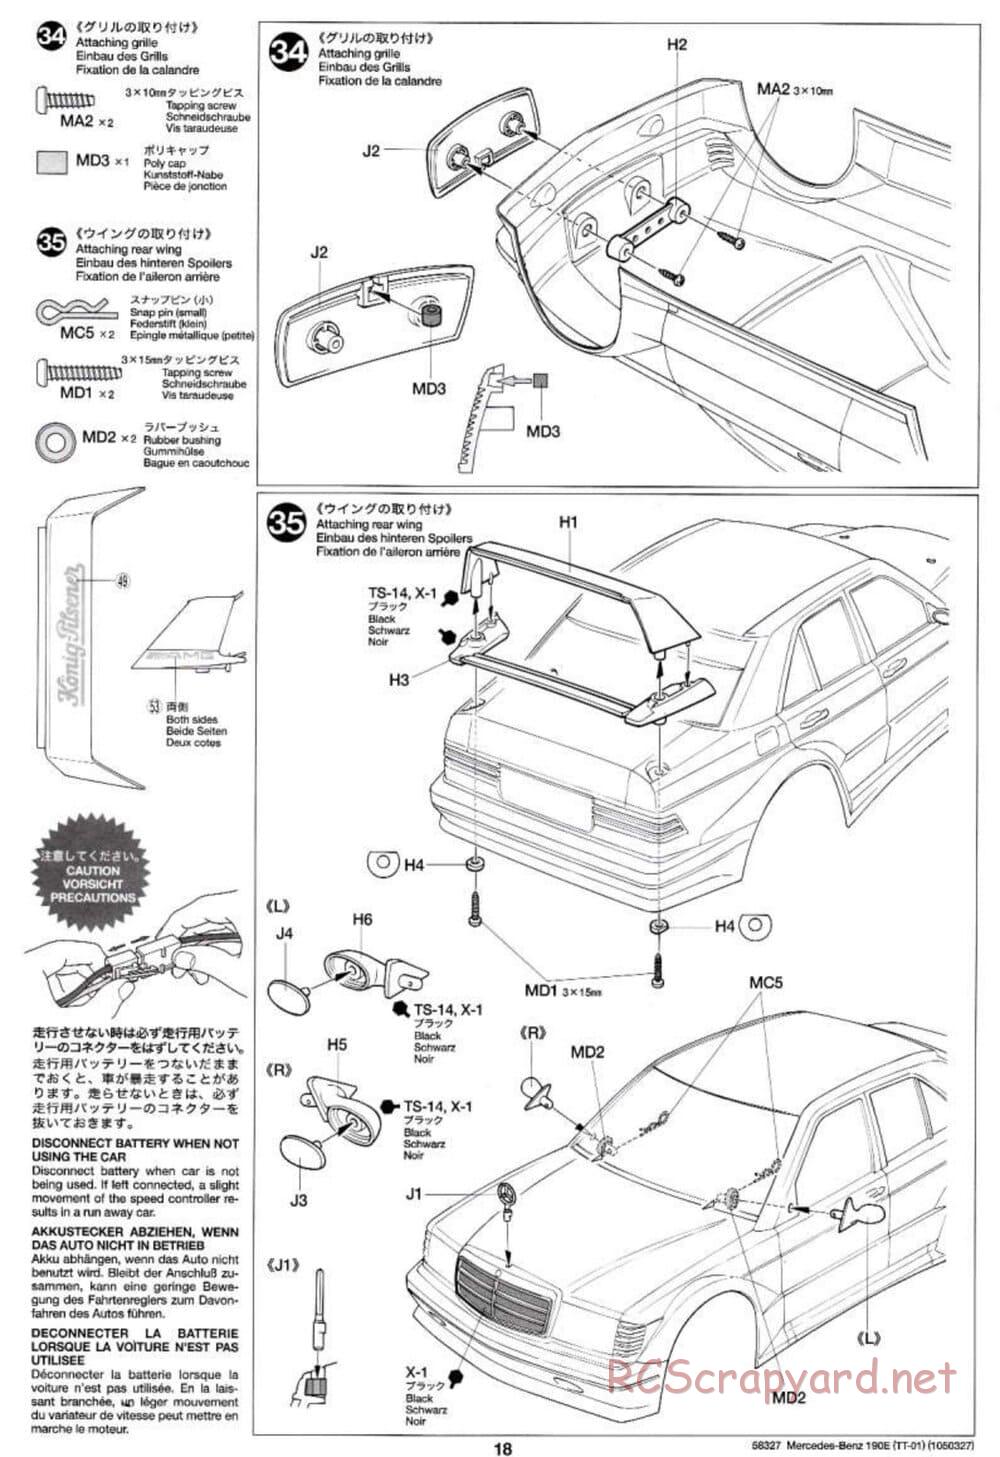 Tamiya - Mercedes Benz 190E Evo.II AMG - TT-01 Chassis - Manual - Page 18